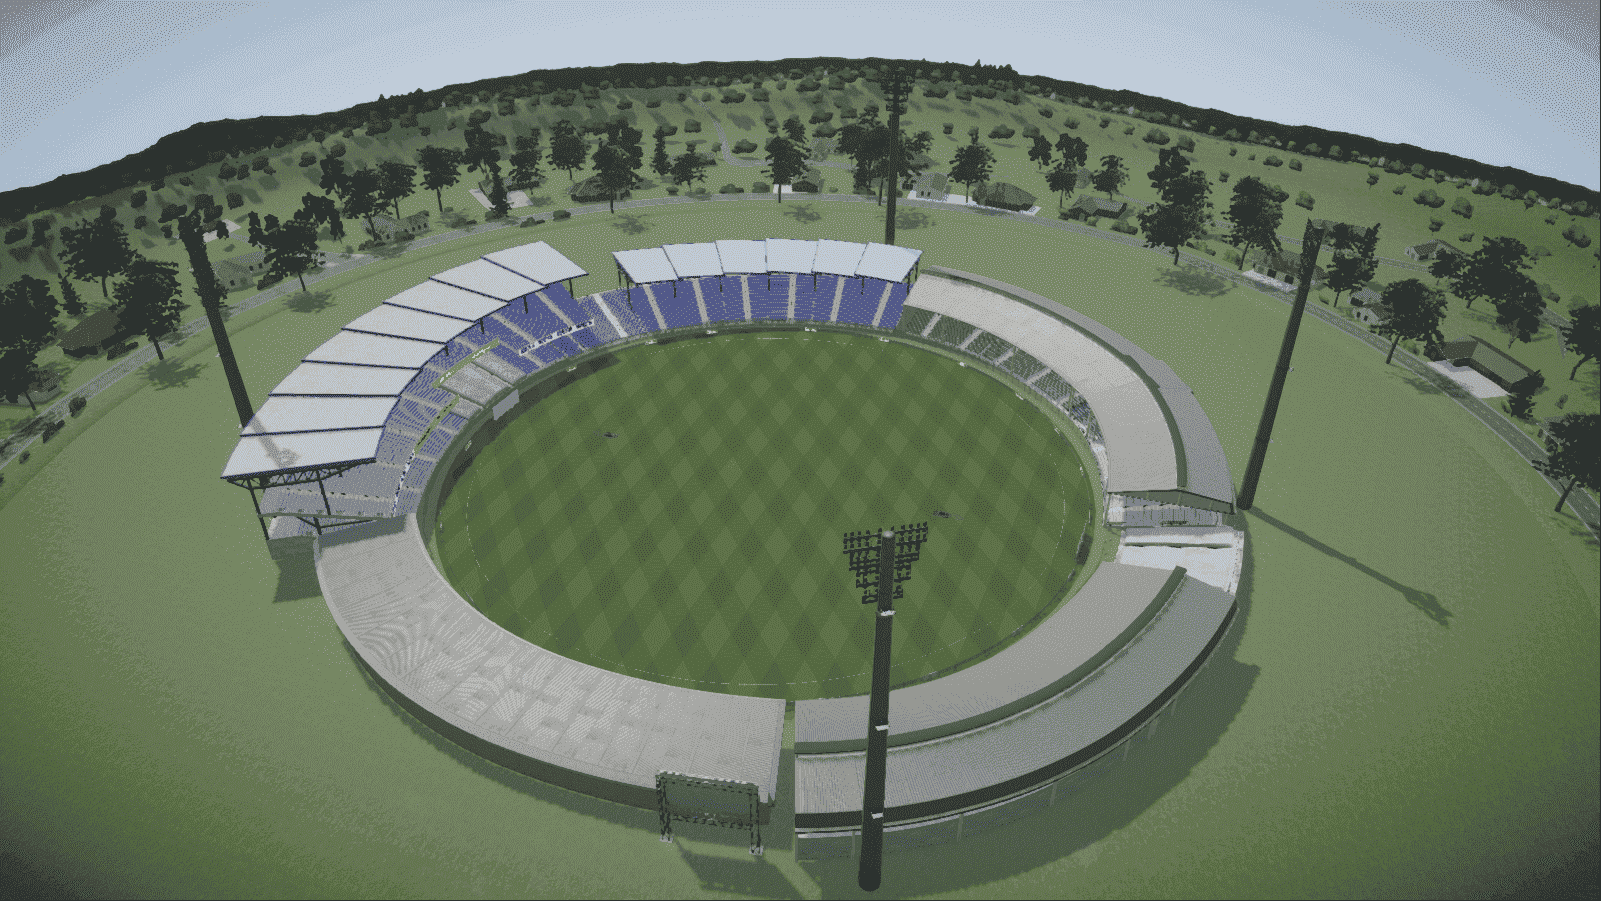 dbc17_sharjah cricket stadium_stadium_screenshot1.png